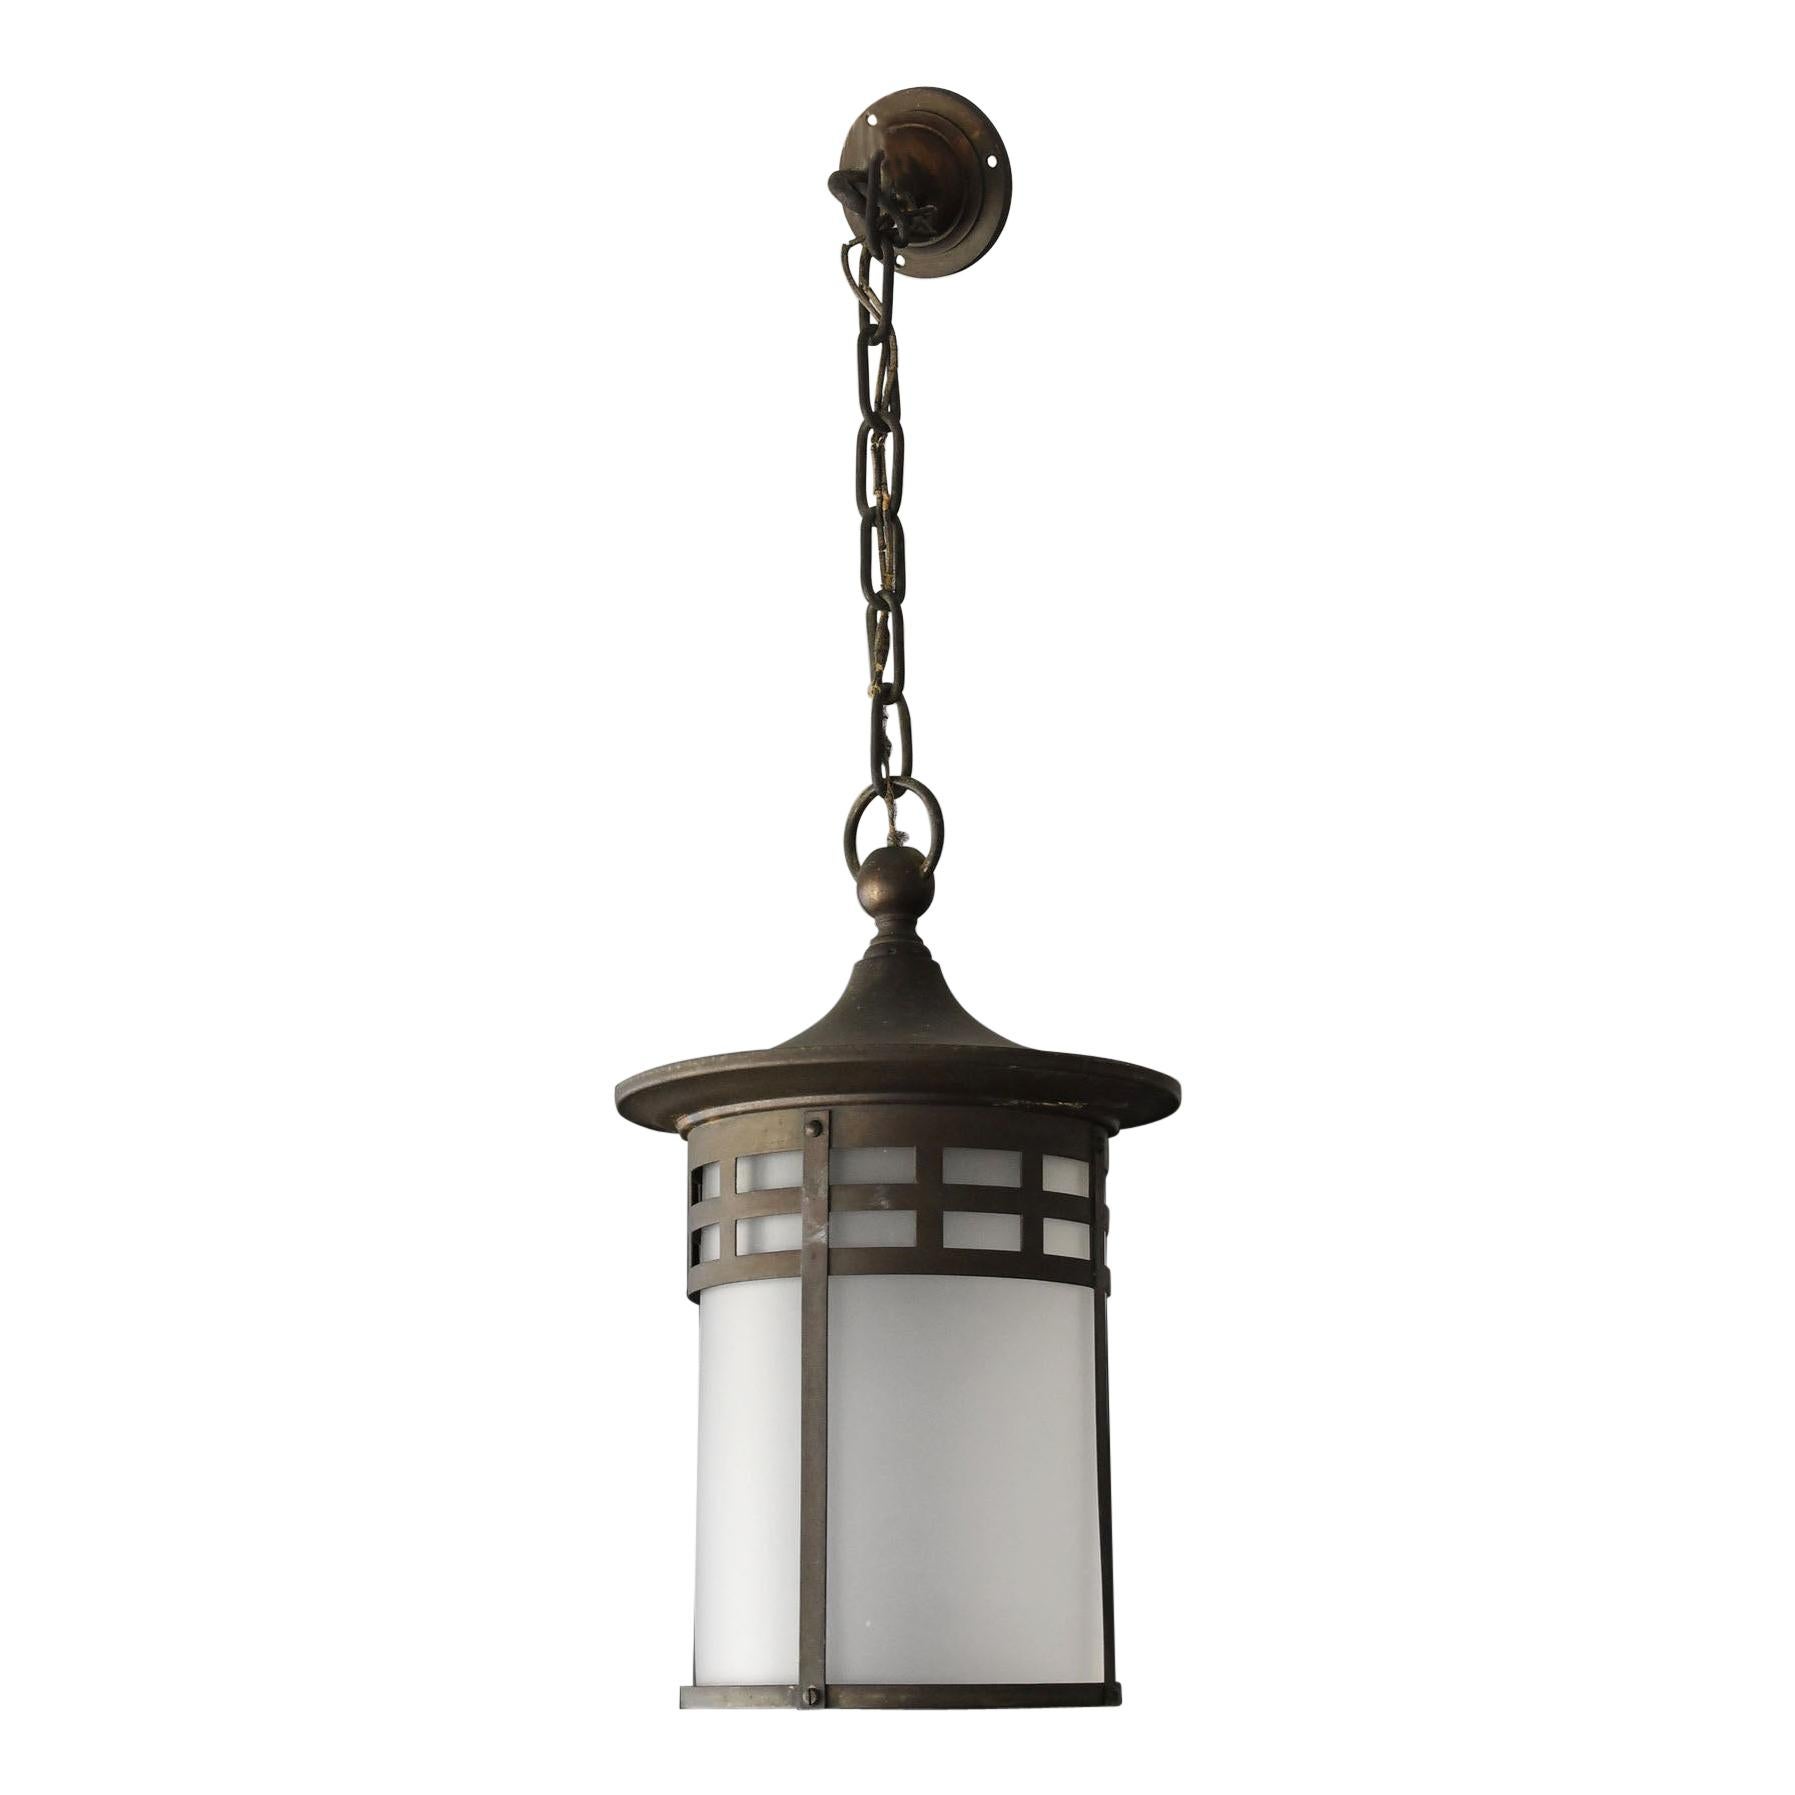 Japanese Antique Hanging Lantern Type Glass Pendant Light / Ceiling Lighting